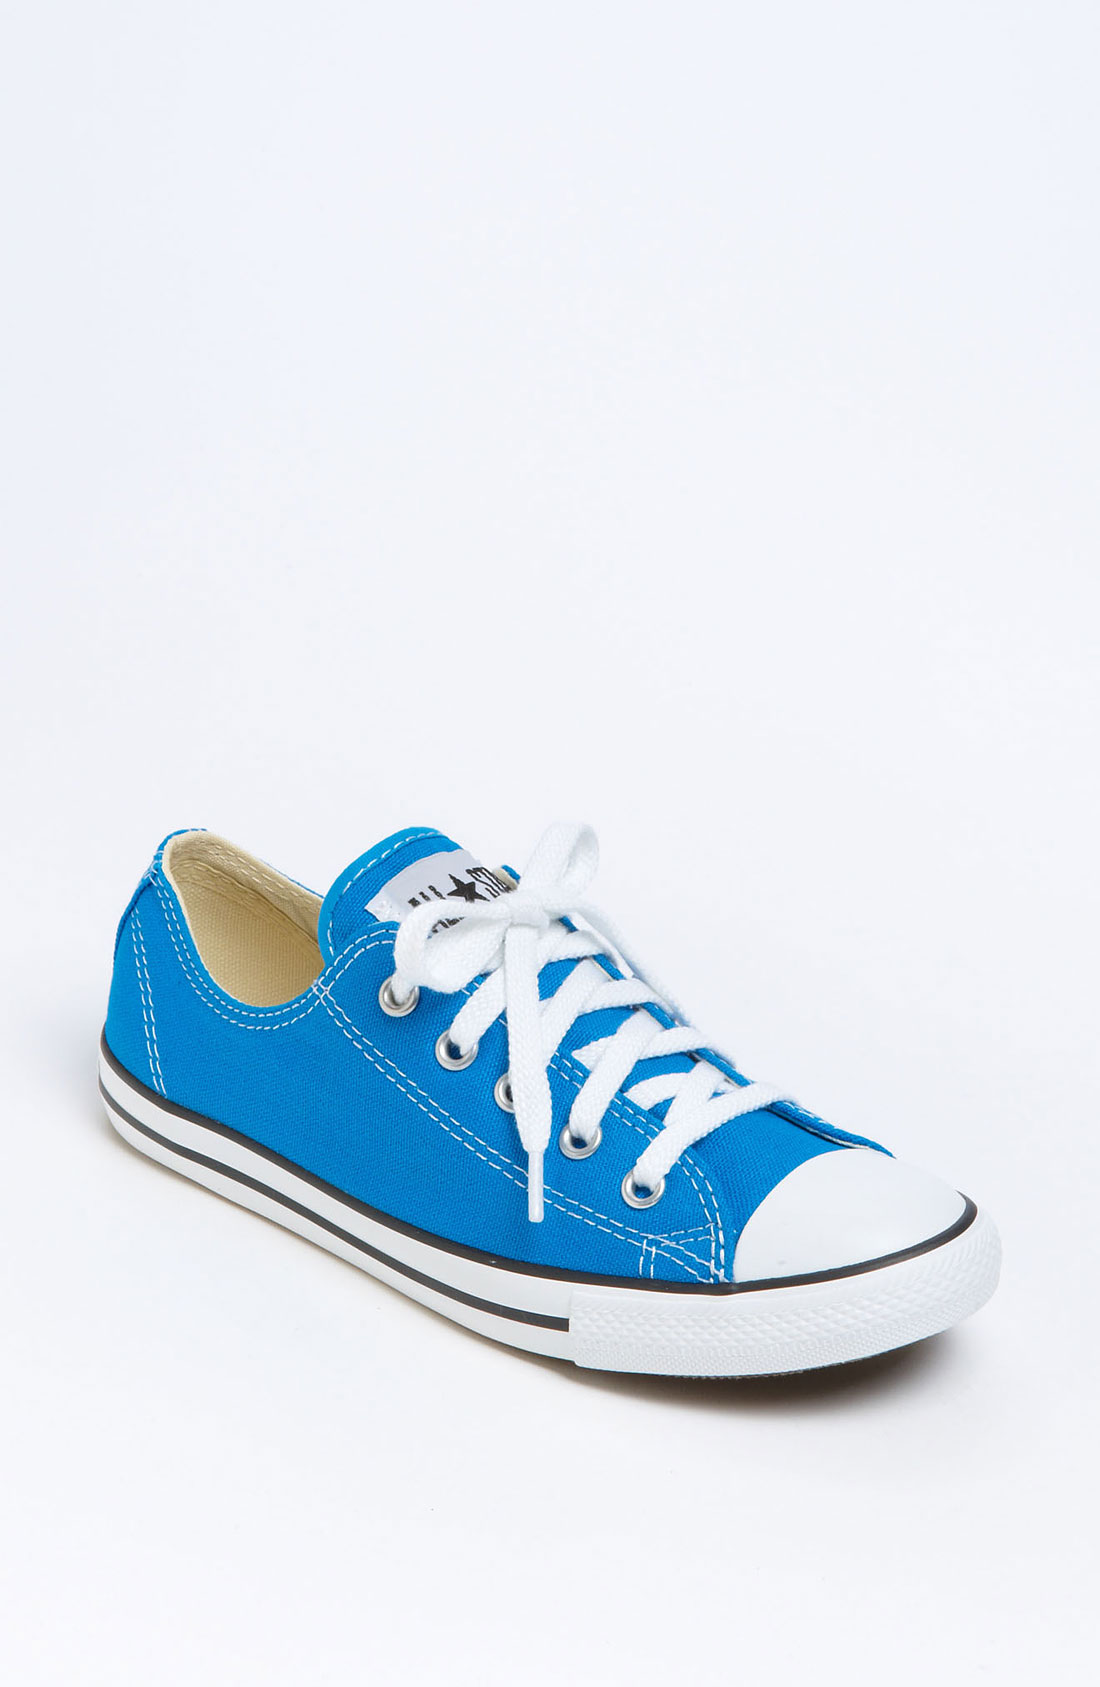 Converse Chuck Taylor Dainty Sneaker in Blue (cloisonne) | Lyst